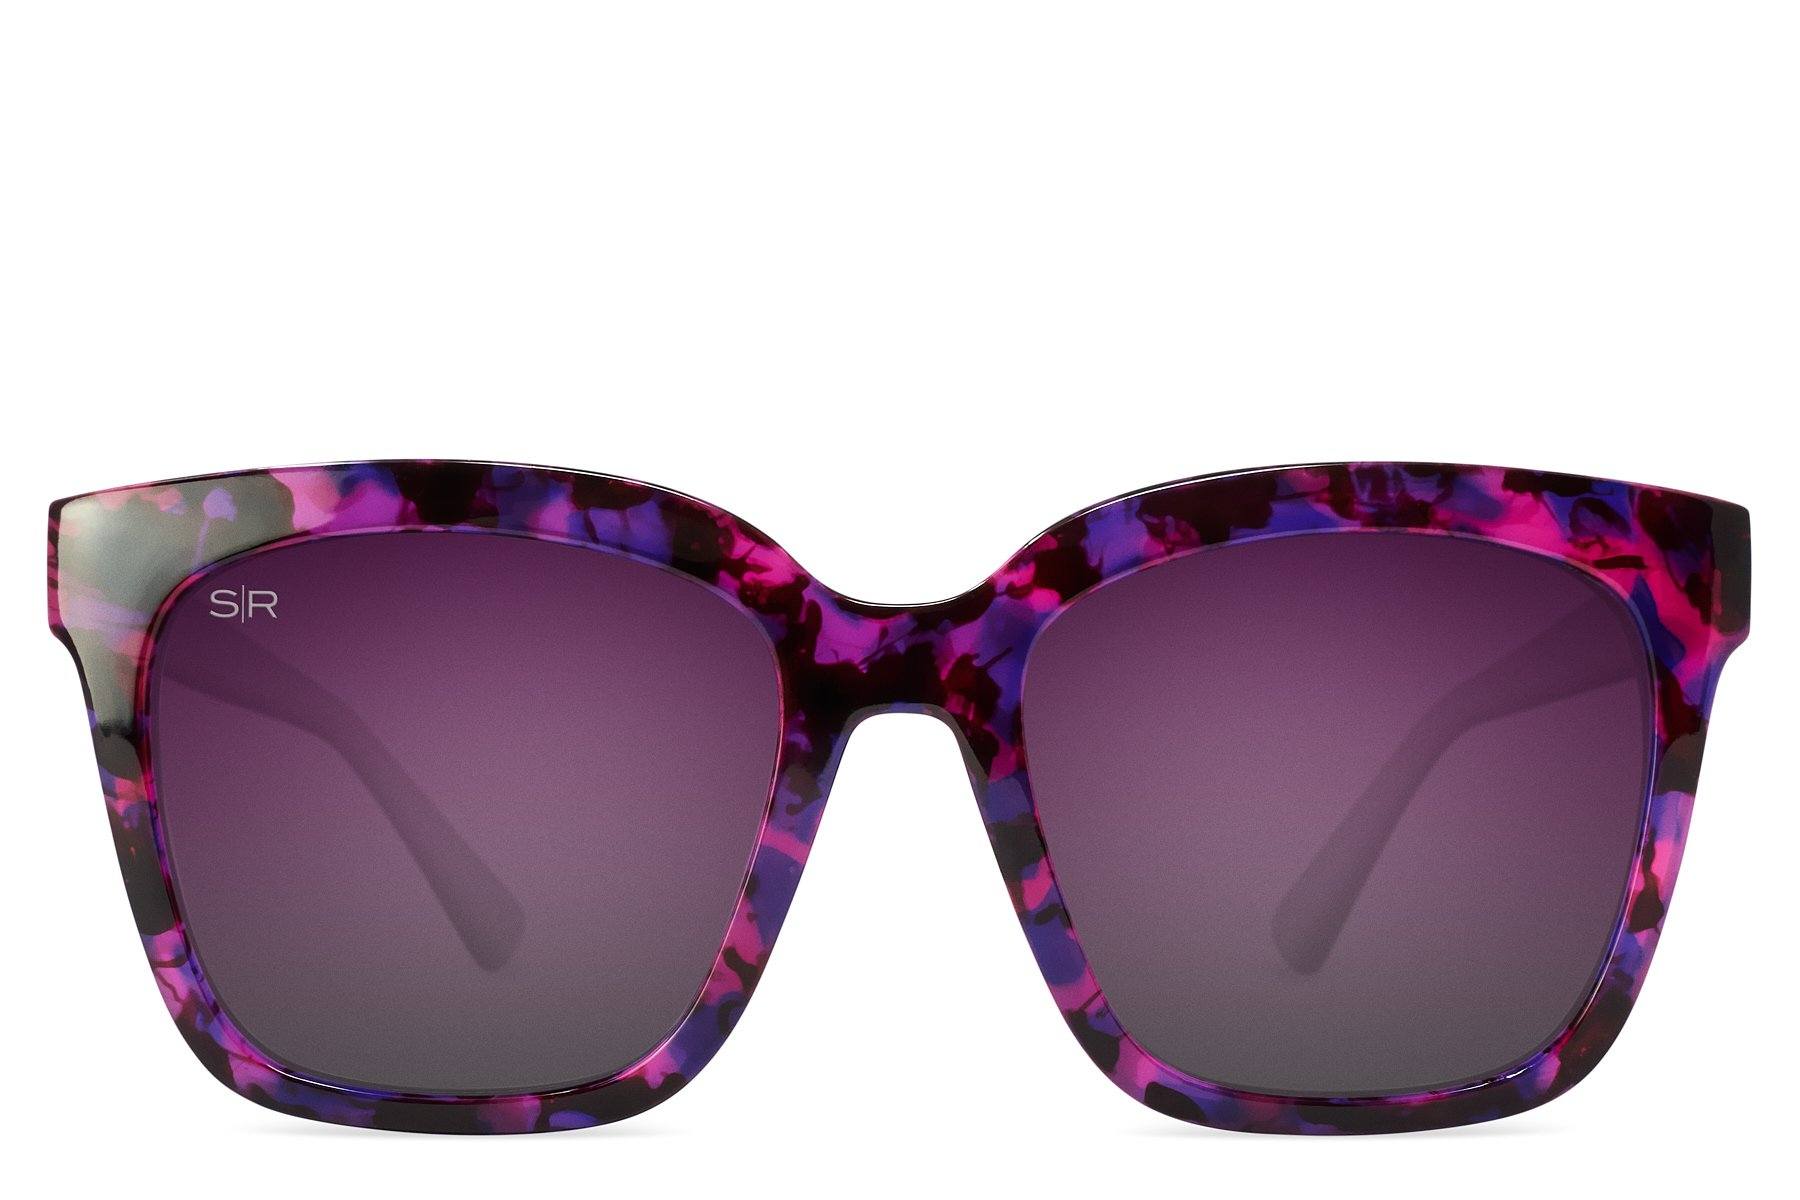 Azalea - Galaxy Tortoise Shady Rays® | Polarized Sunglasses 